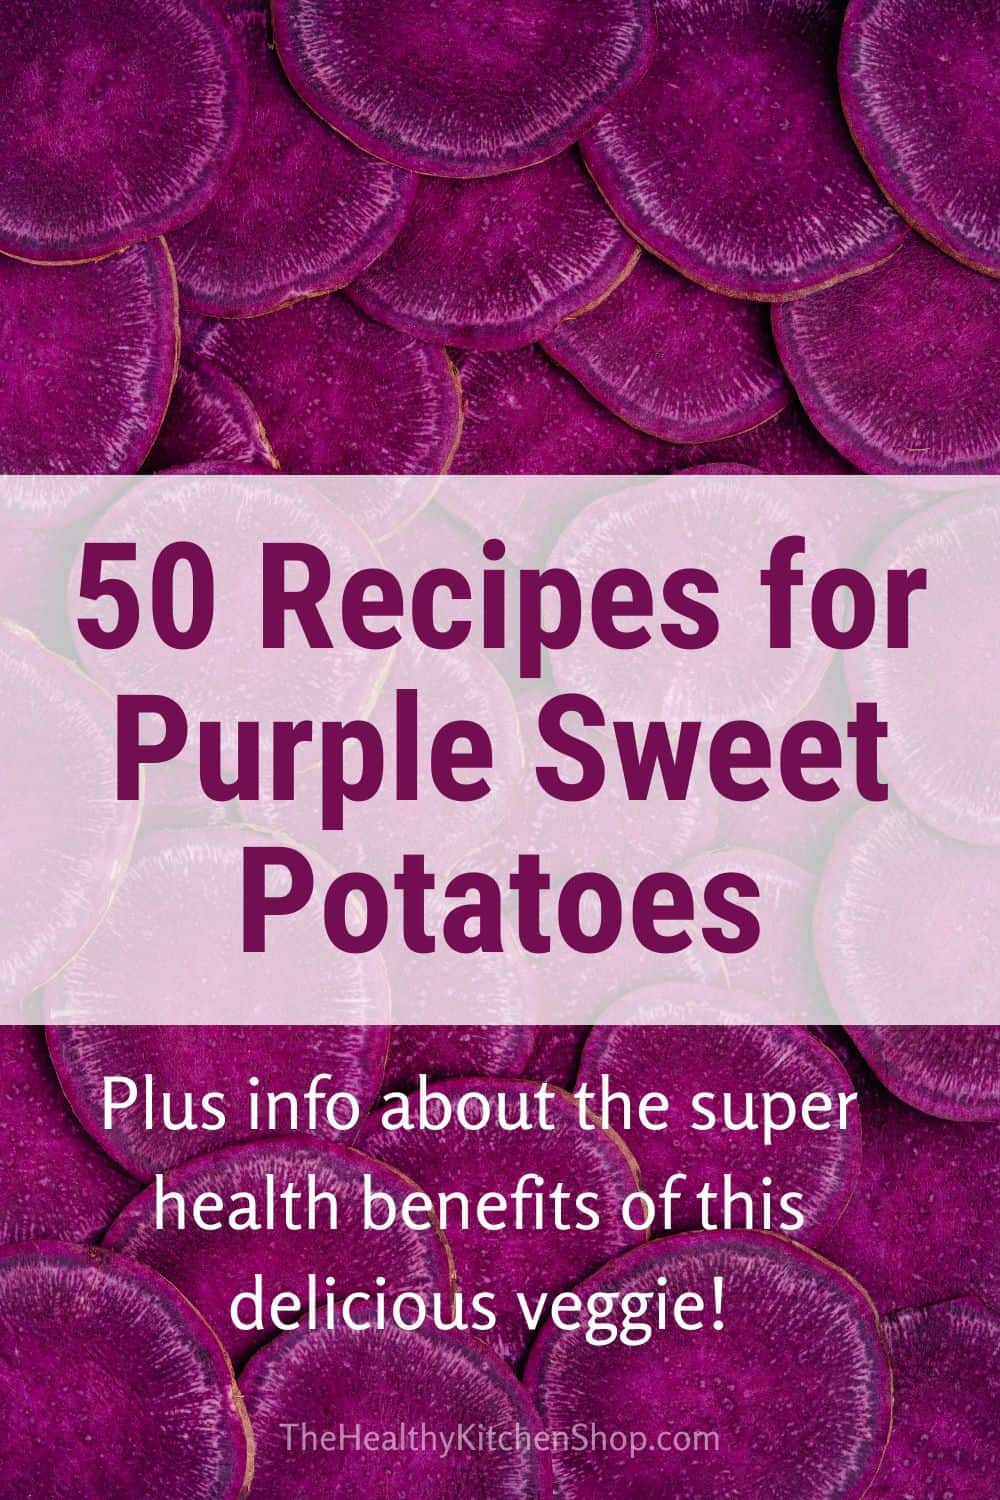 50 Recipes for Purple Sweet Potatoes